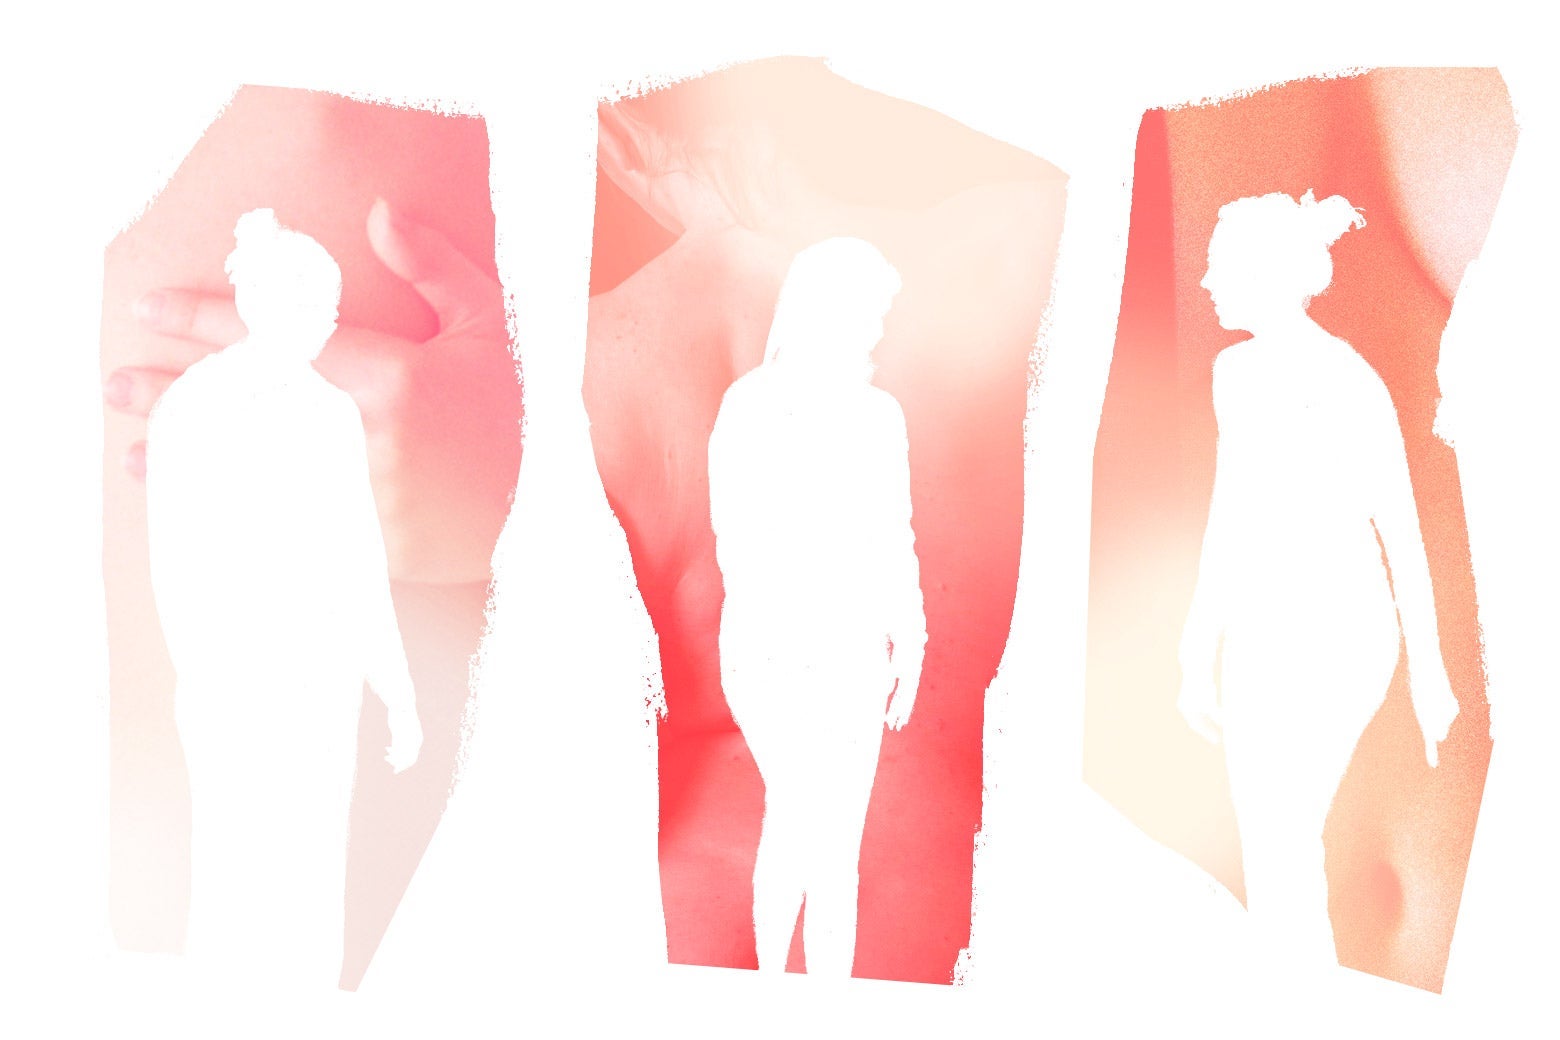 Photo silhouettes of three women